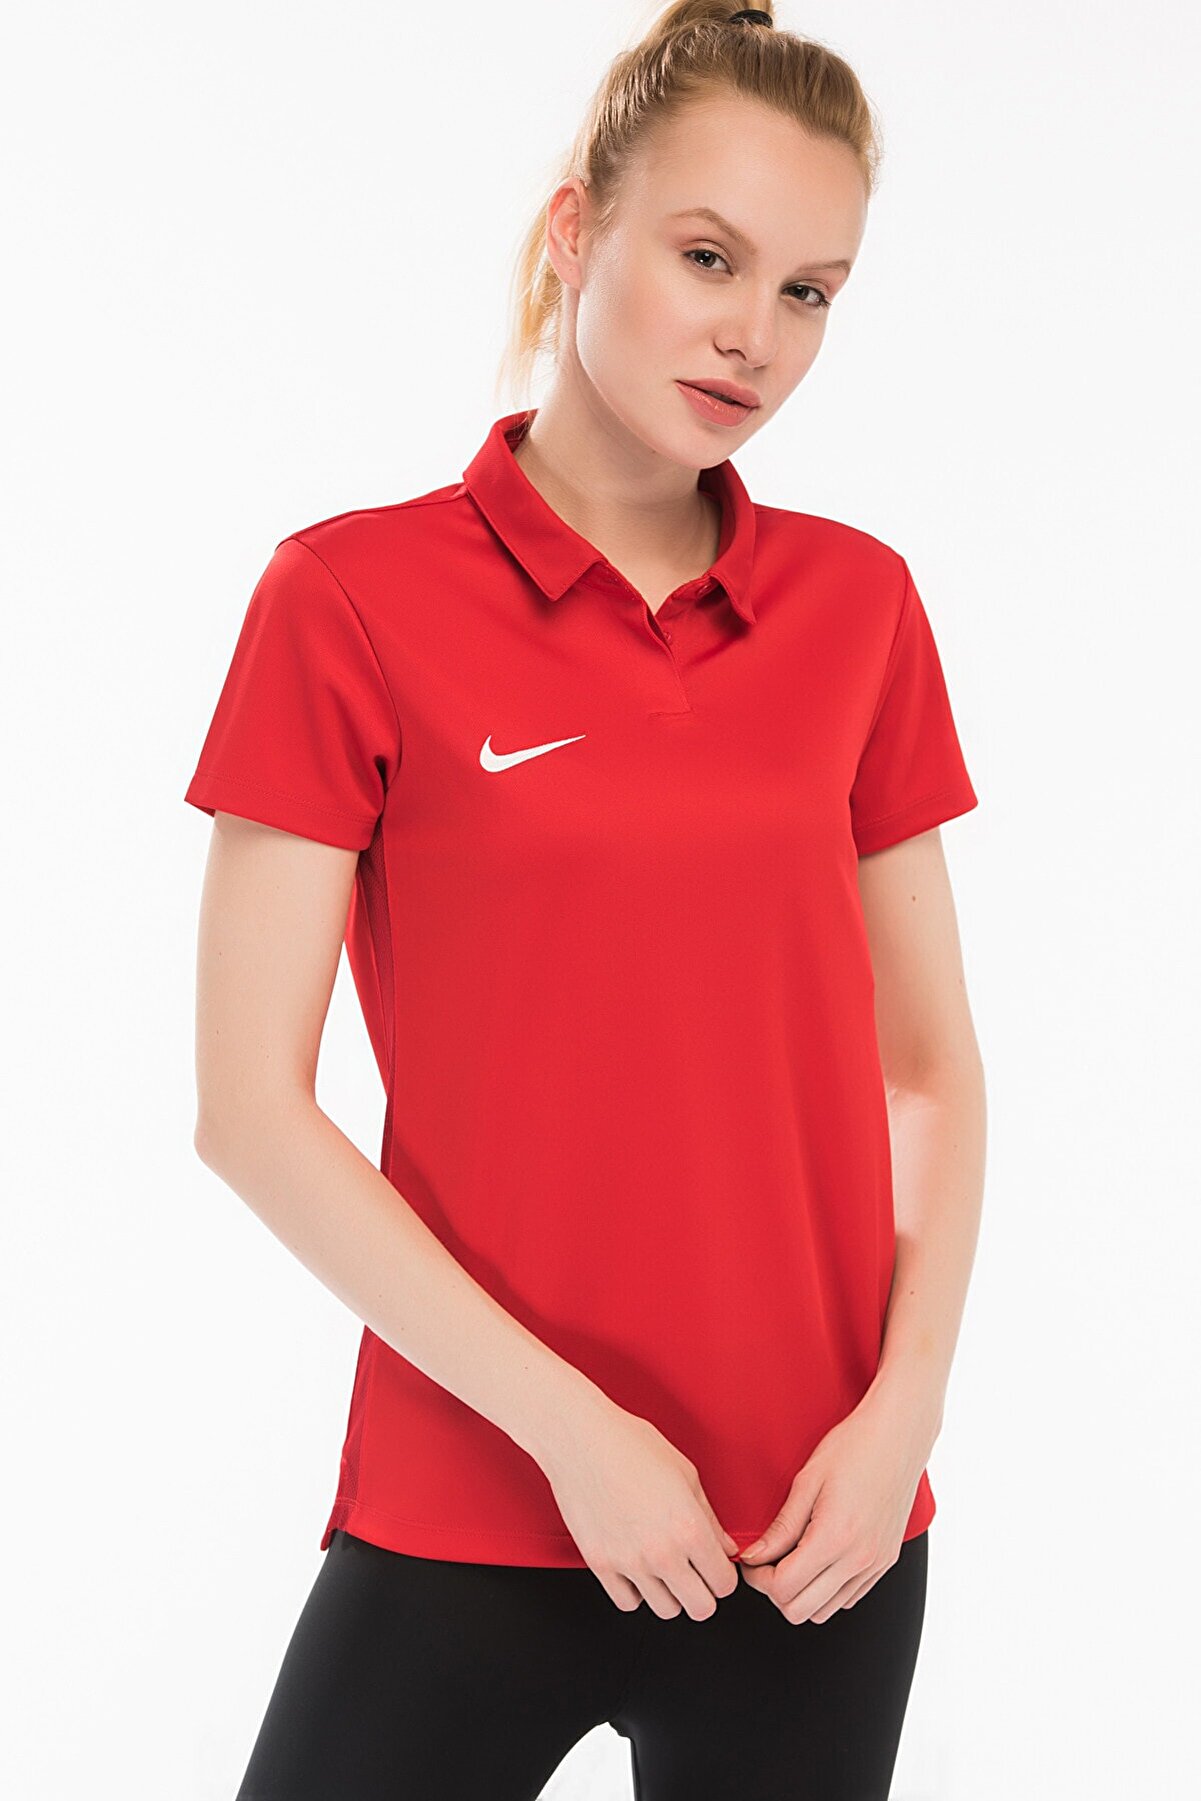 Nike 899986-657 Kadın Polo T-Shirt.